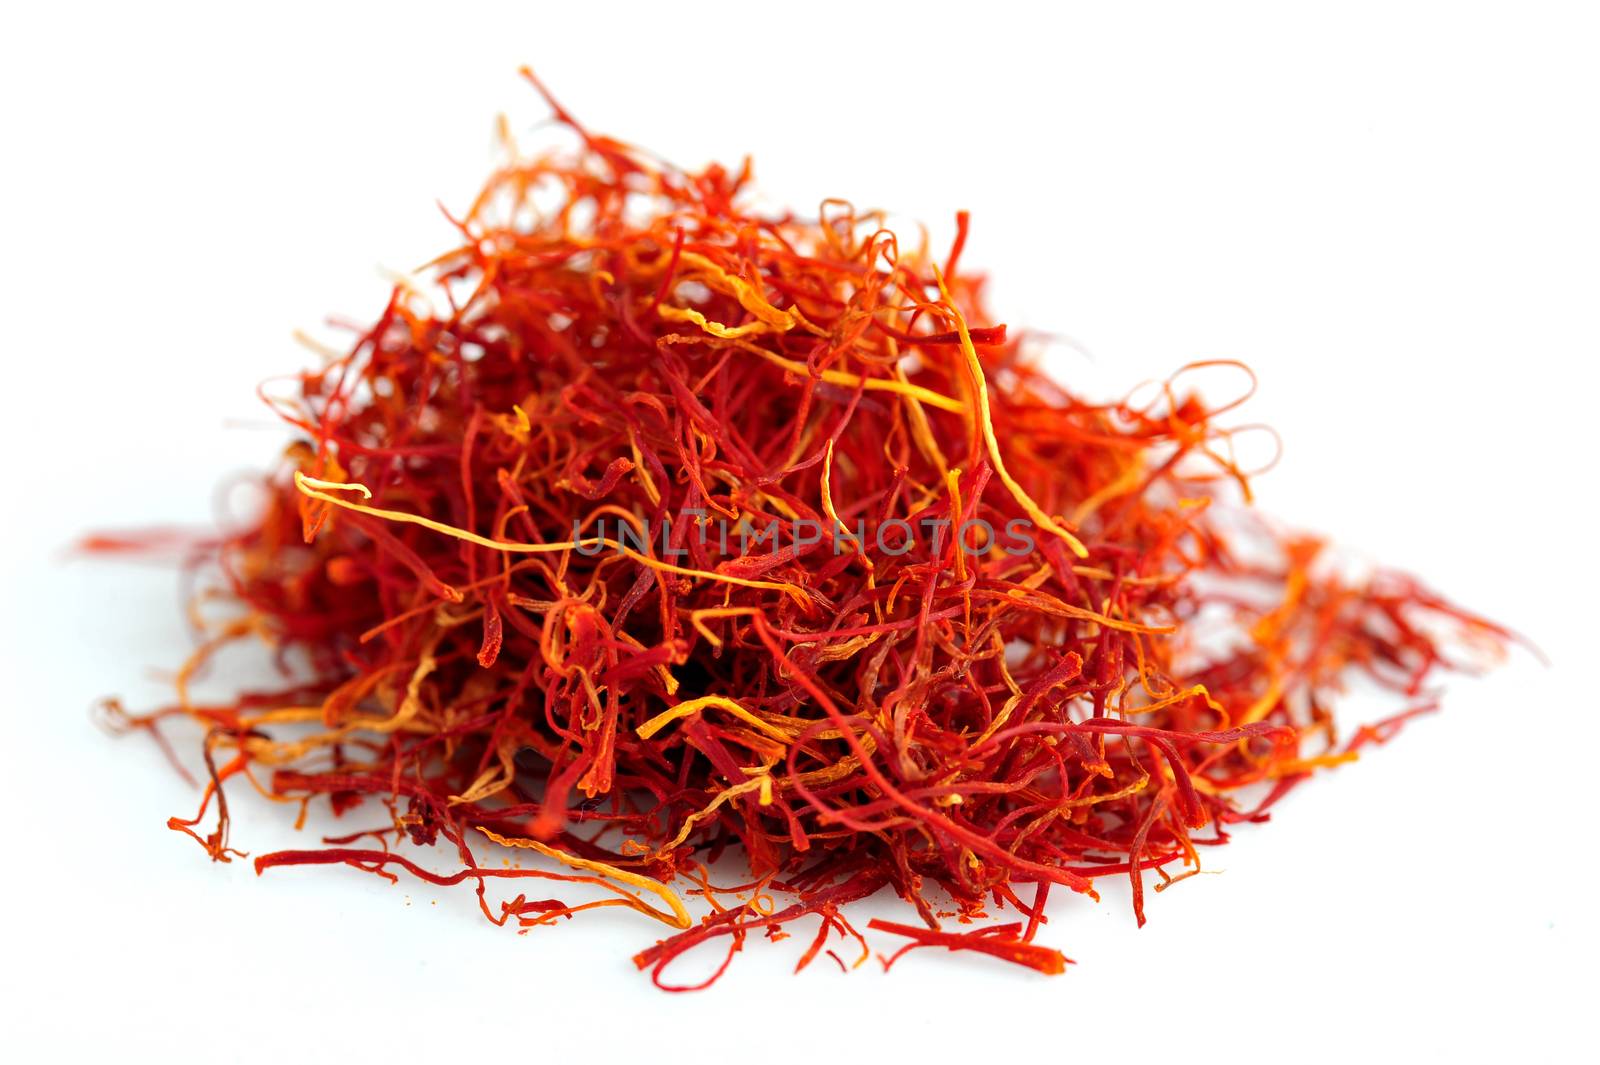 Isolated image of Saffron Spice on White Background